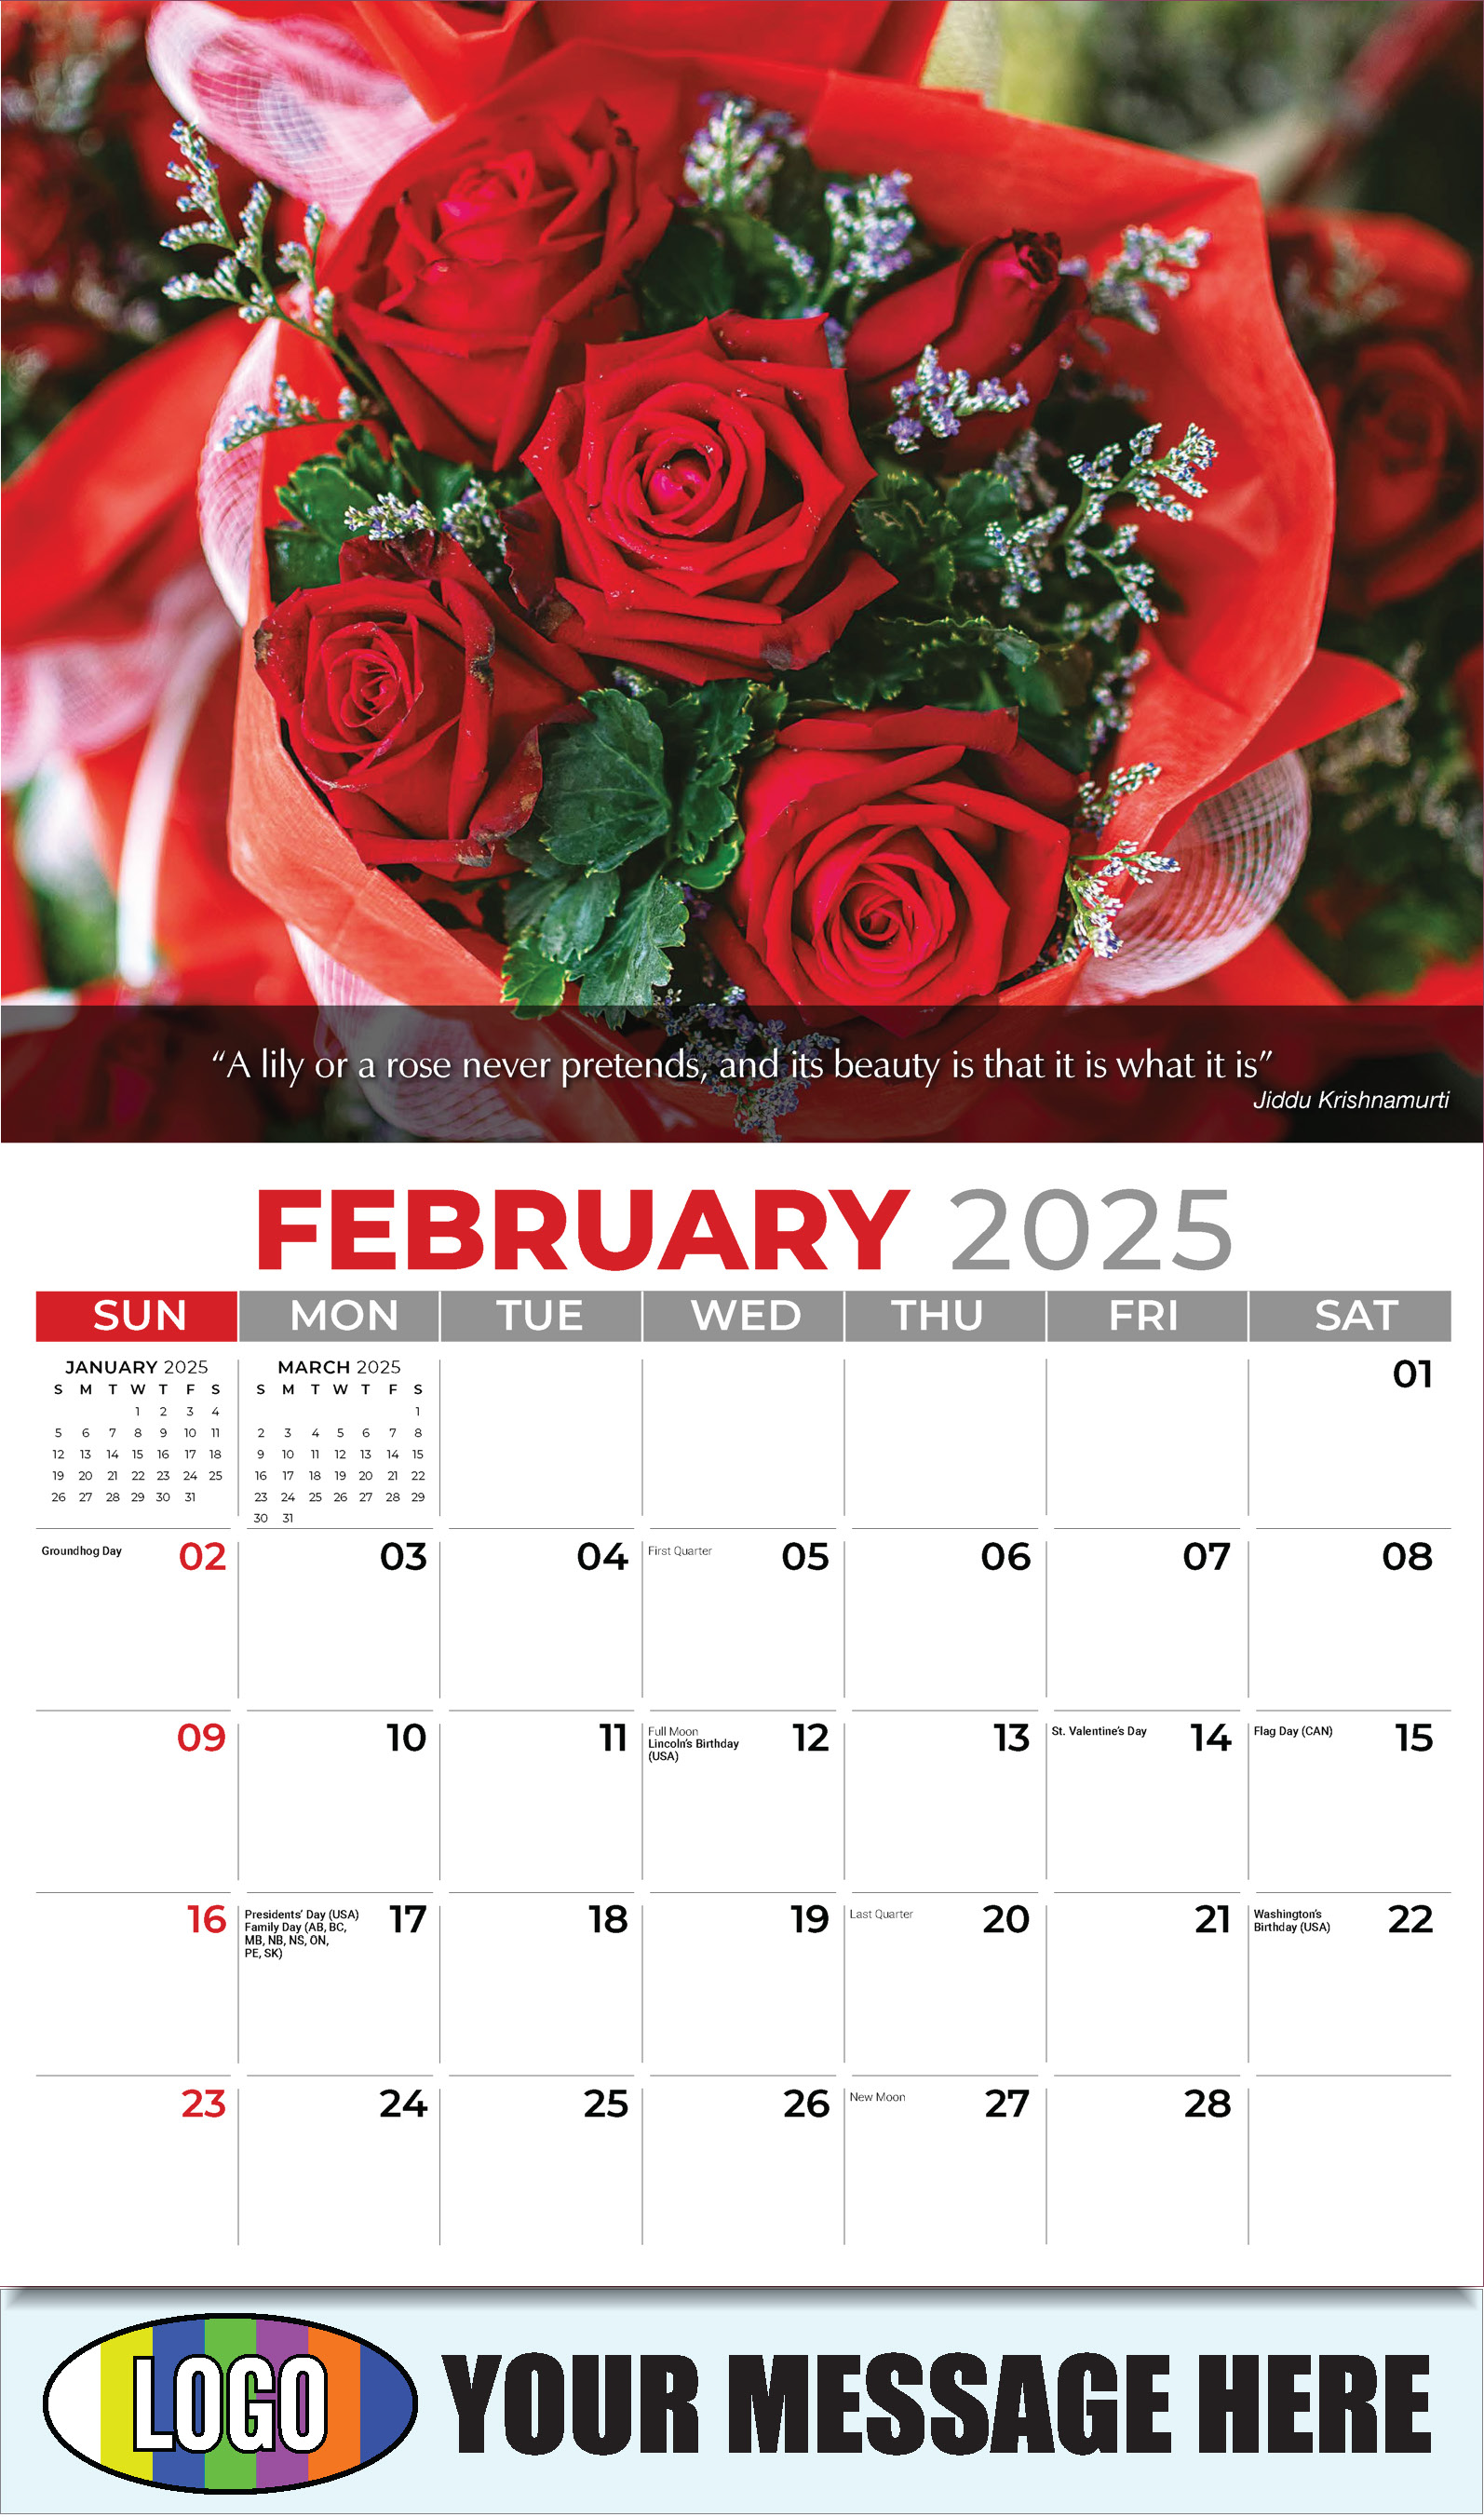 Flowers and Gardens 2025 Business Advertising Calendar - February